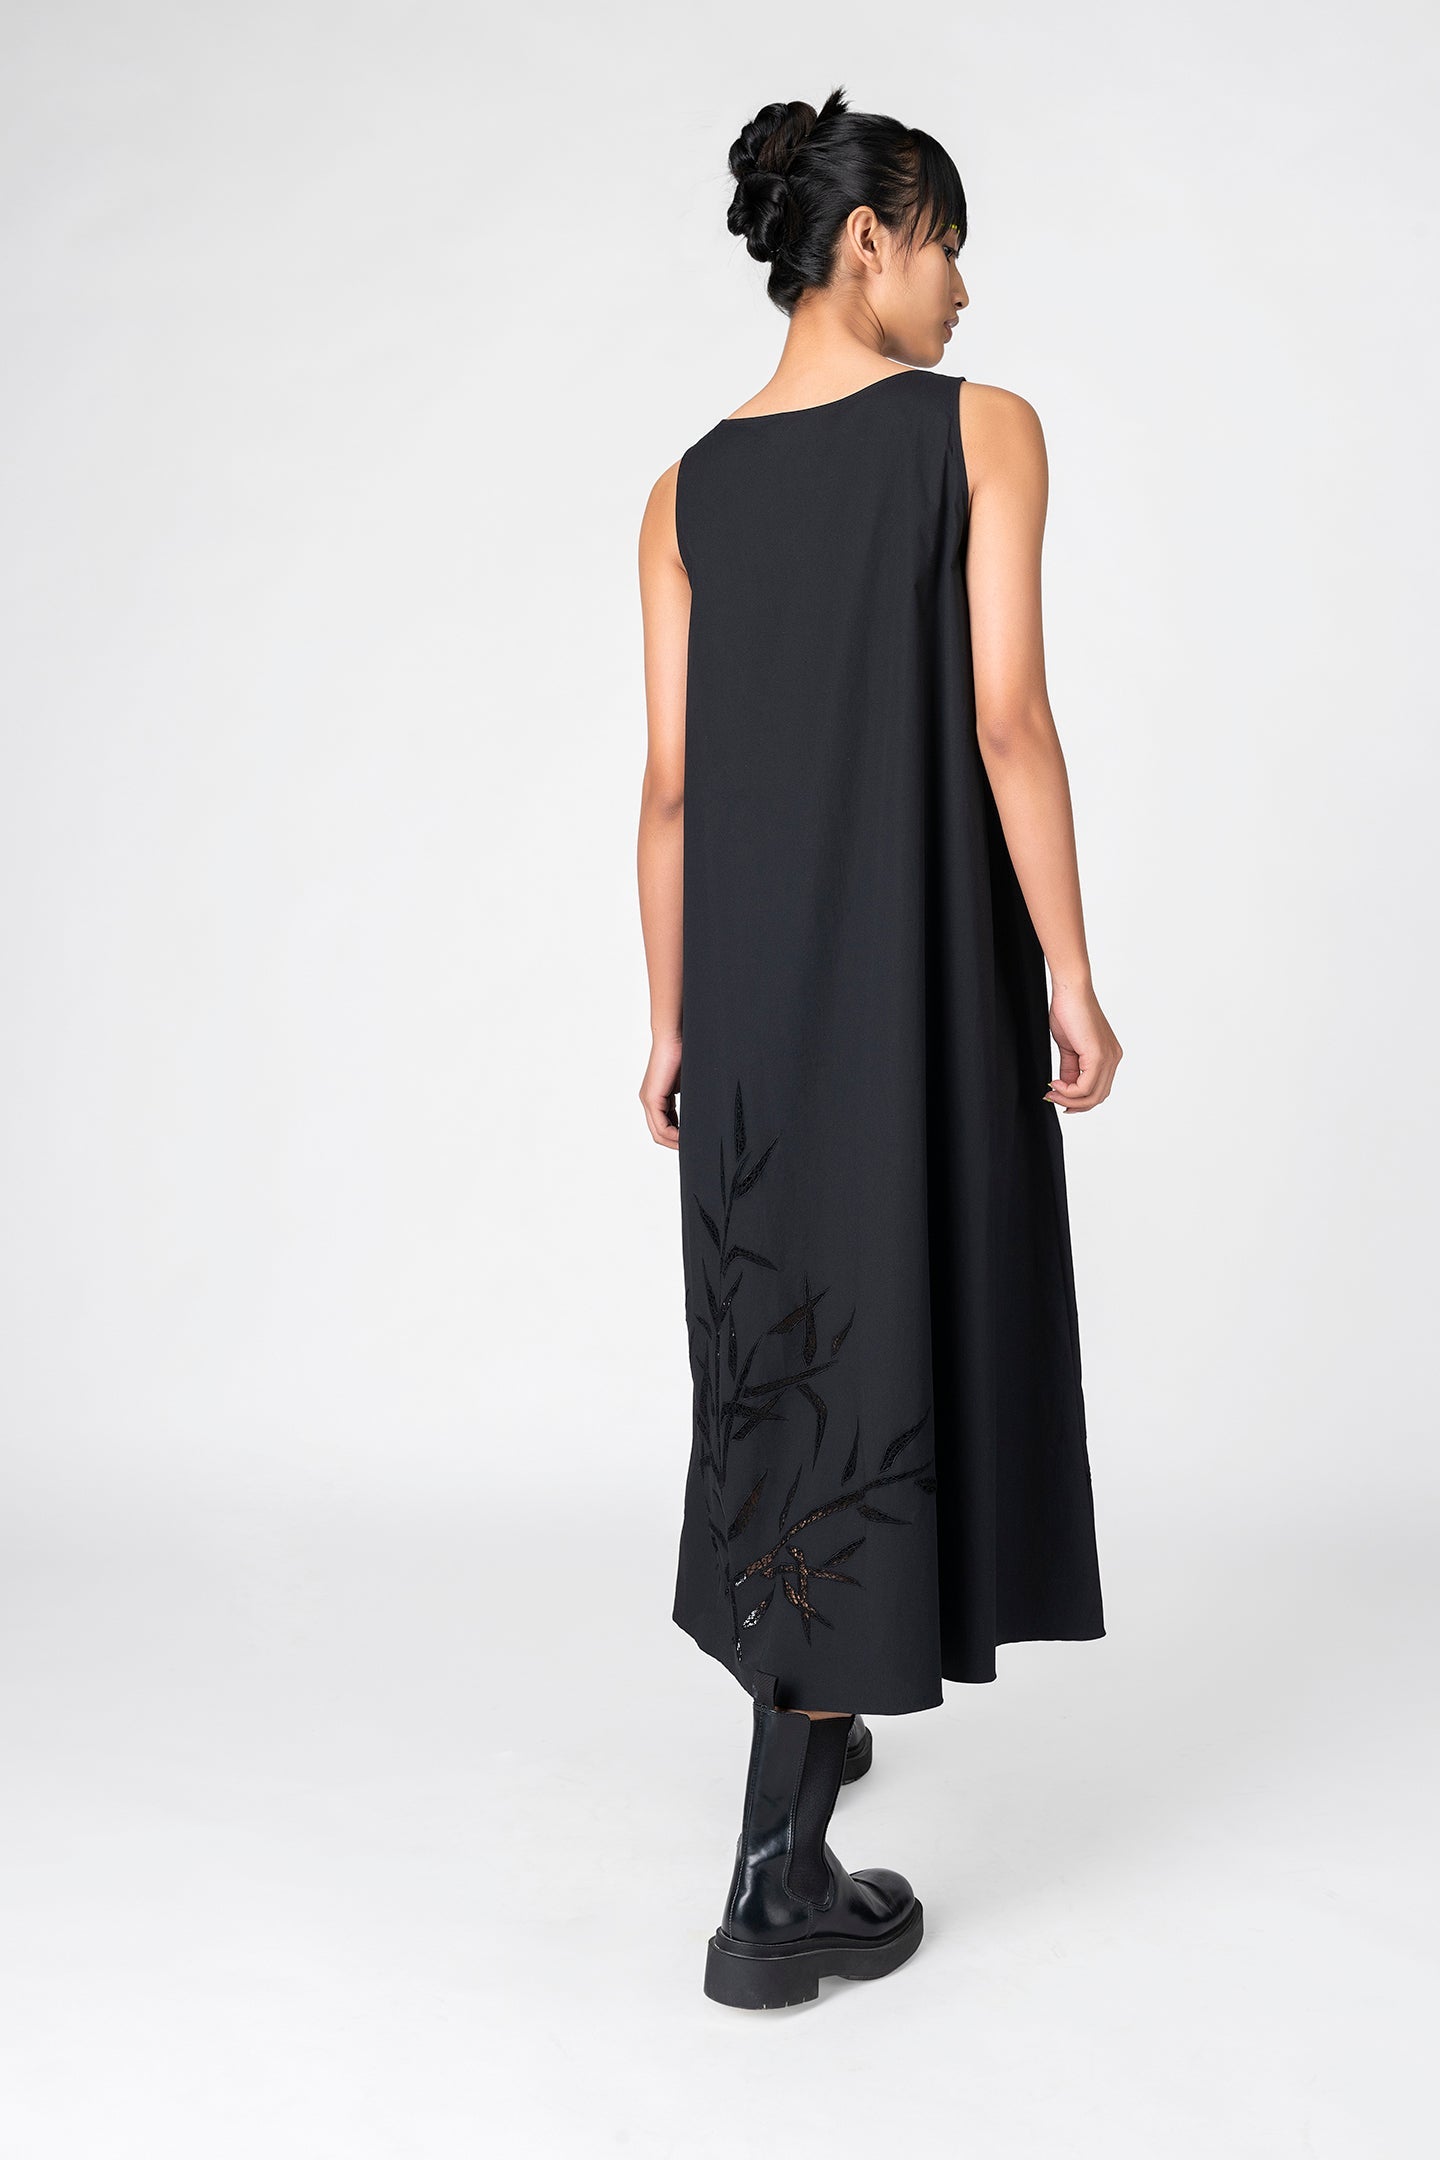 cutwork-embroidered-dress. - Genes online store 2020